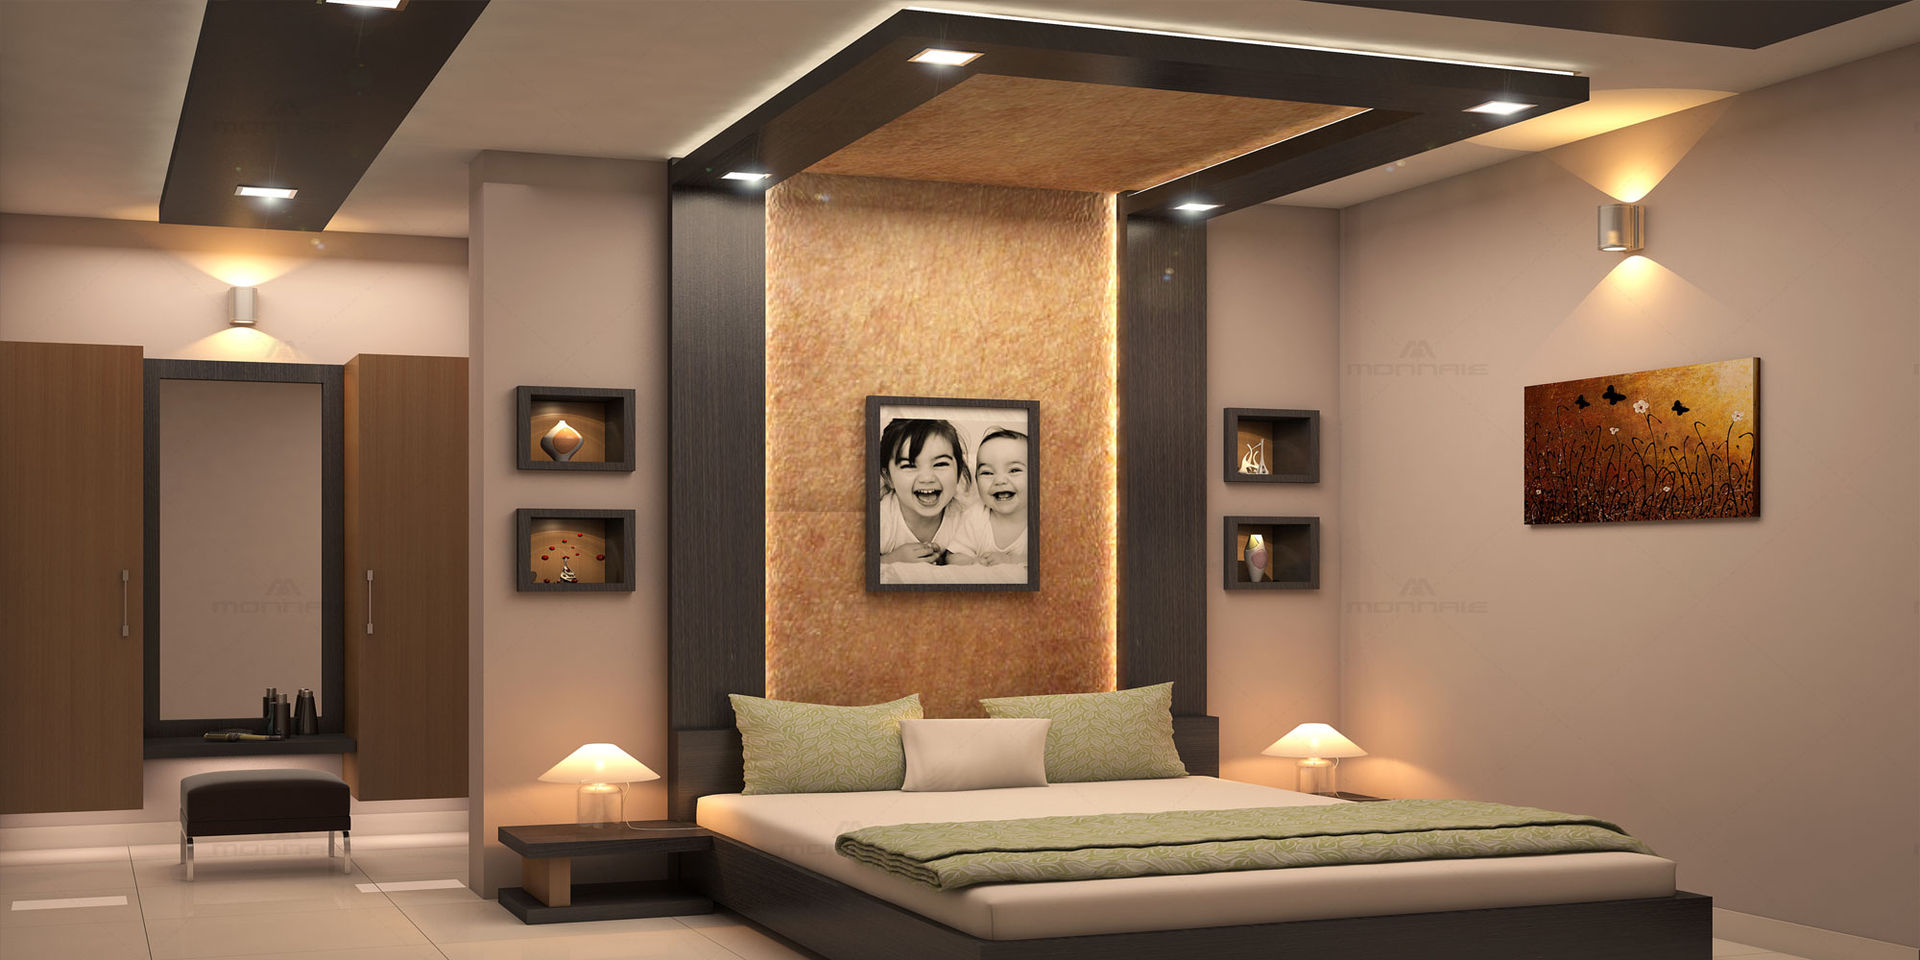 Marvellous, Premdas Krishna Premdas Krishna Classic style bedroom Picture frame,Property,Light,Comfort,Wood,Interior design,Architecture,Lighting,Flooring,Lamp